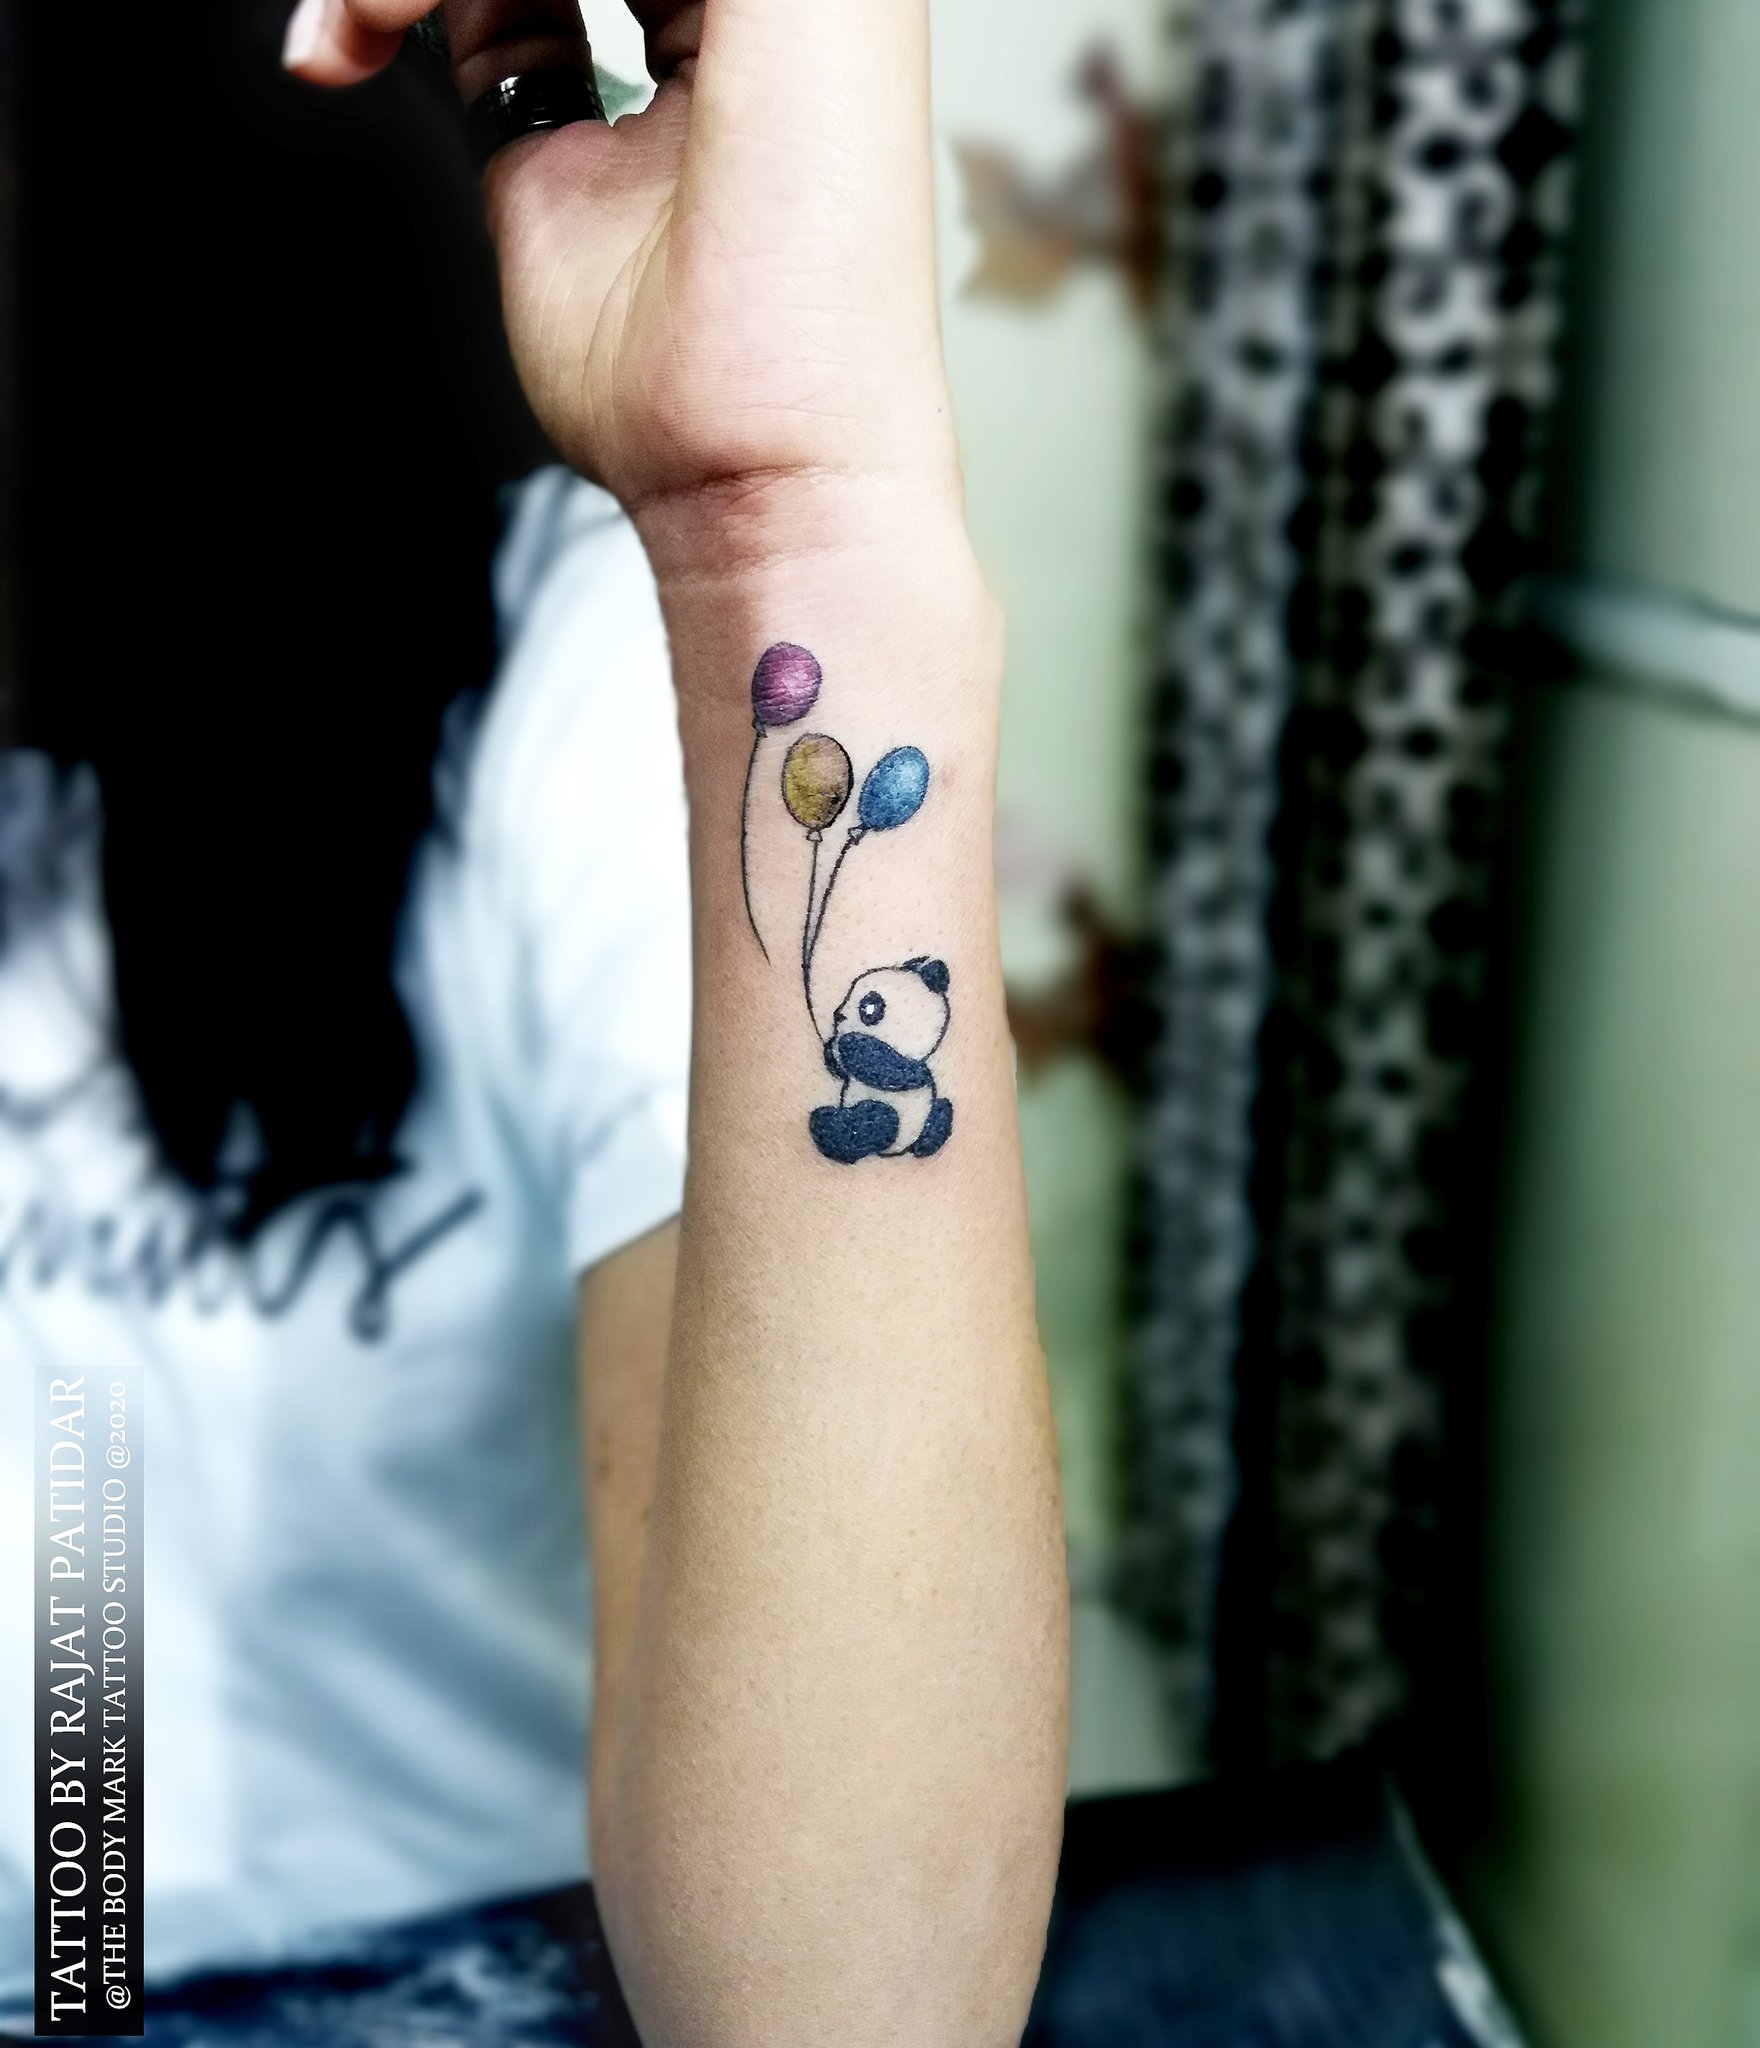 Cute Panda Temporary Tattoo Stickers Arm Wrist Body Art Waterproof Fake  Tattos New Design Animal Tatoos Flash Decals  Temporary Tattoos   AliExpress